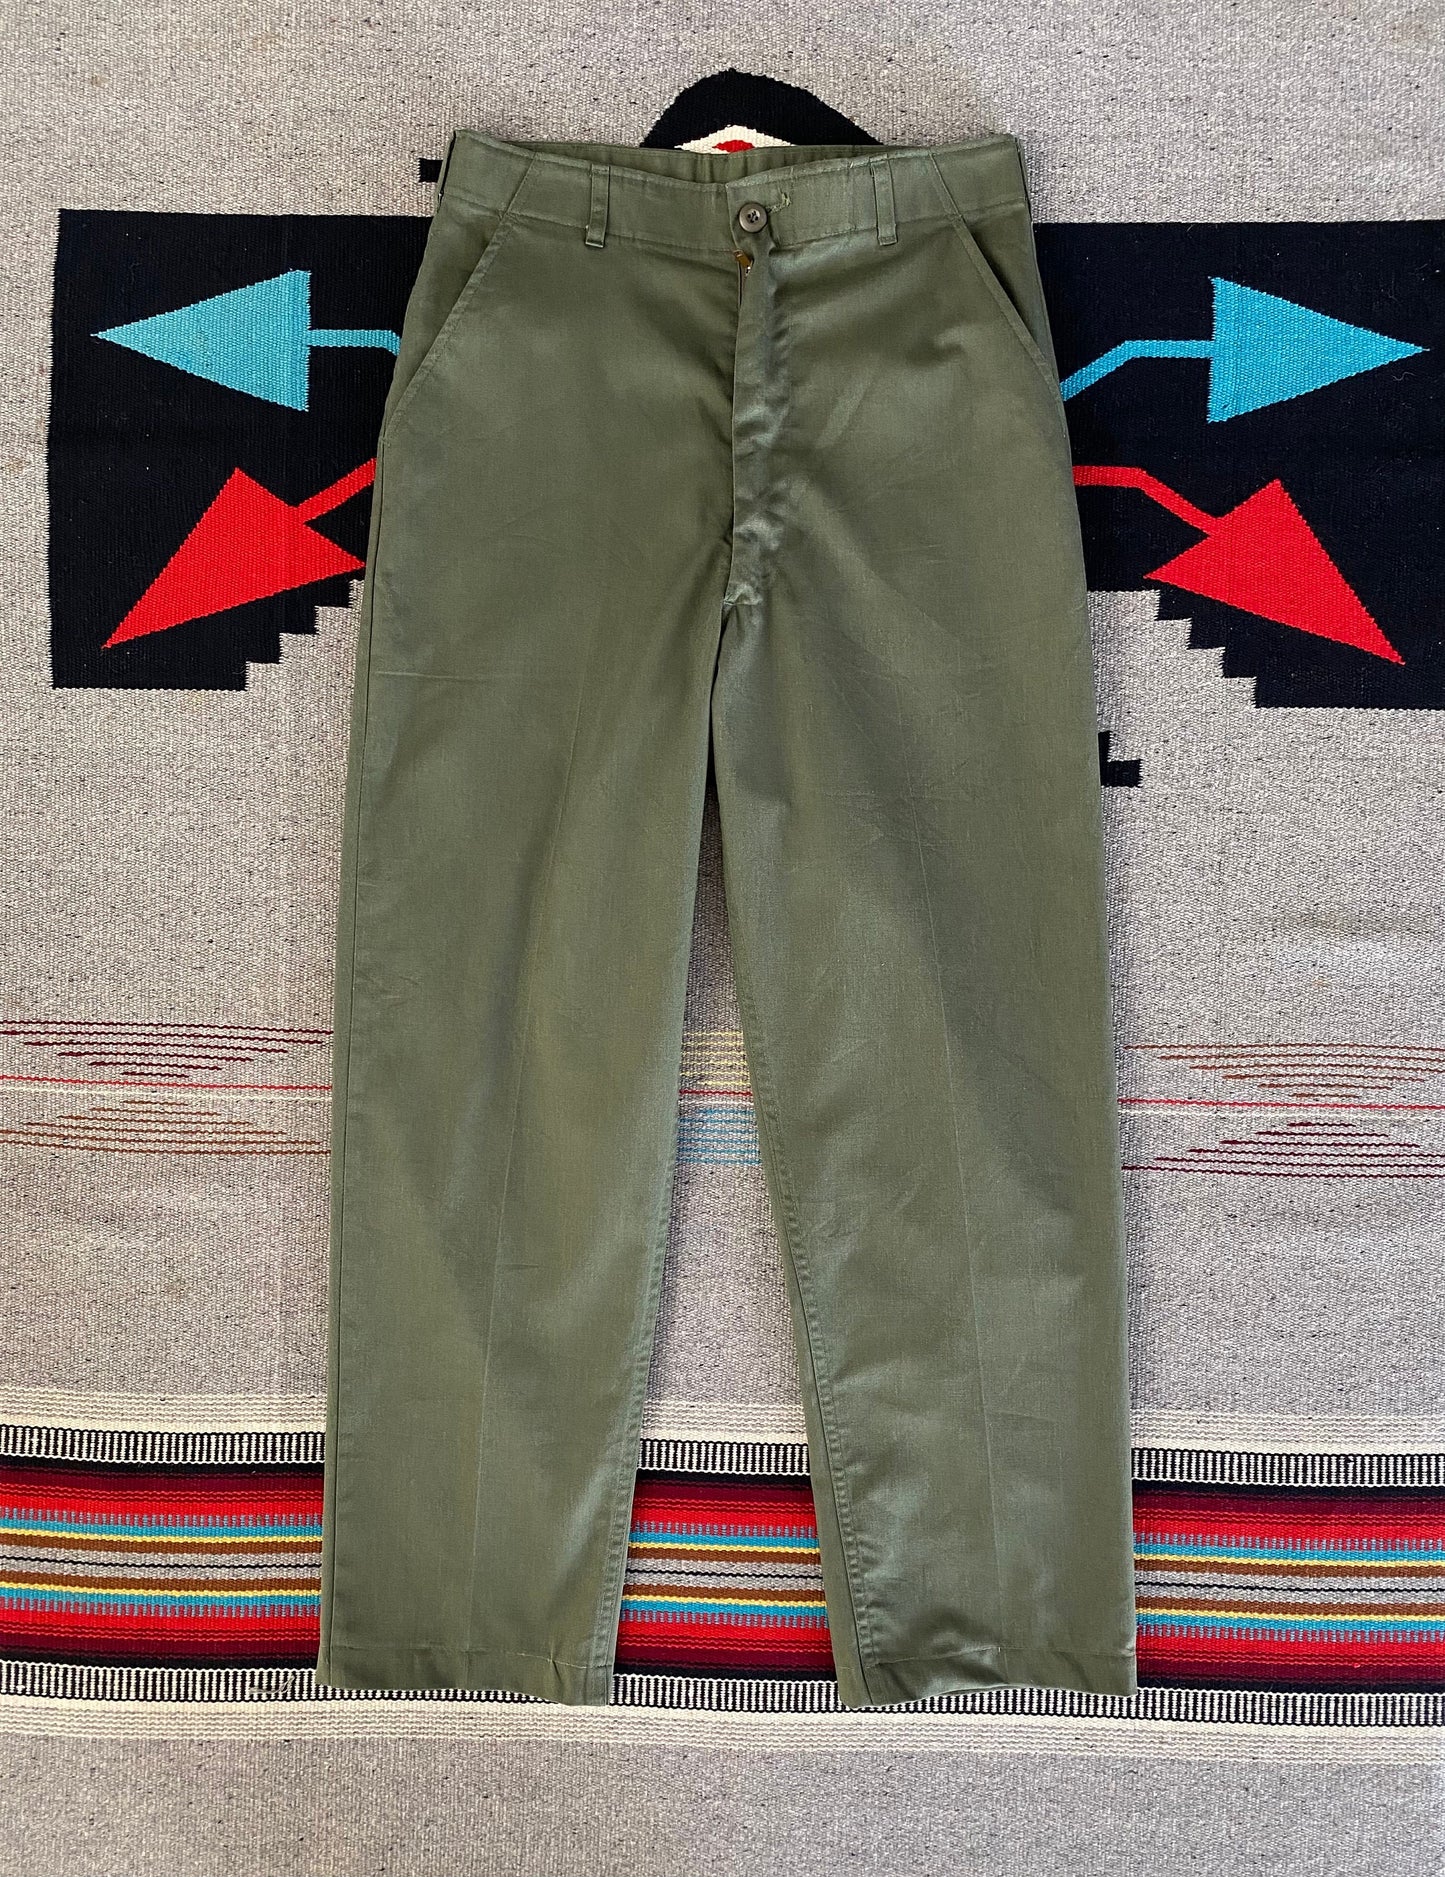 31x30 Authentic Vintage 1991 US Army OG-507  Fatigue pants